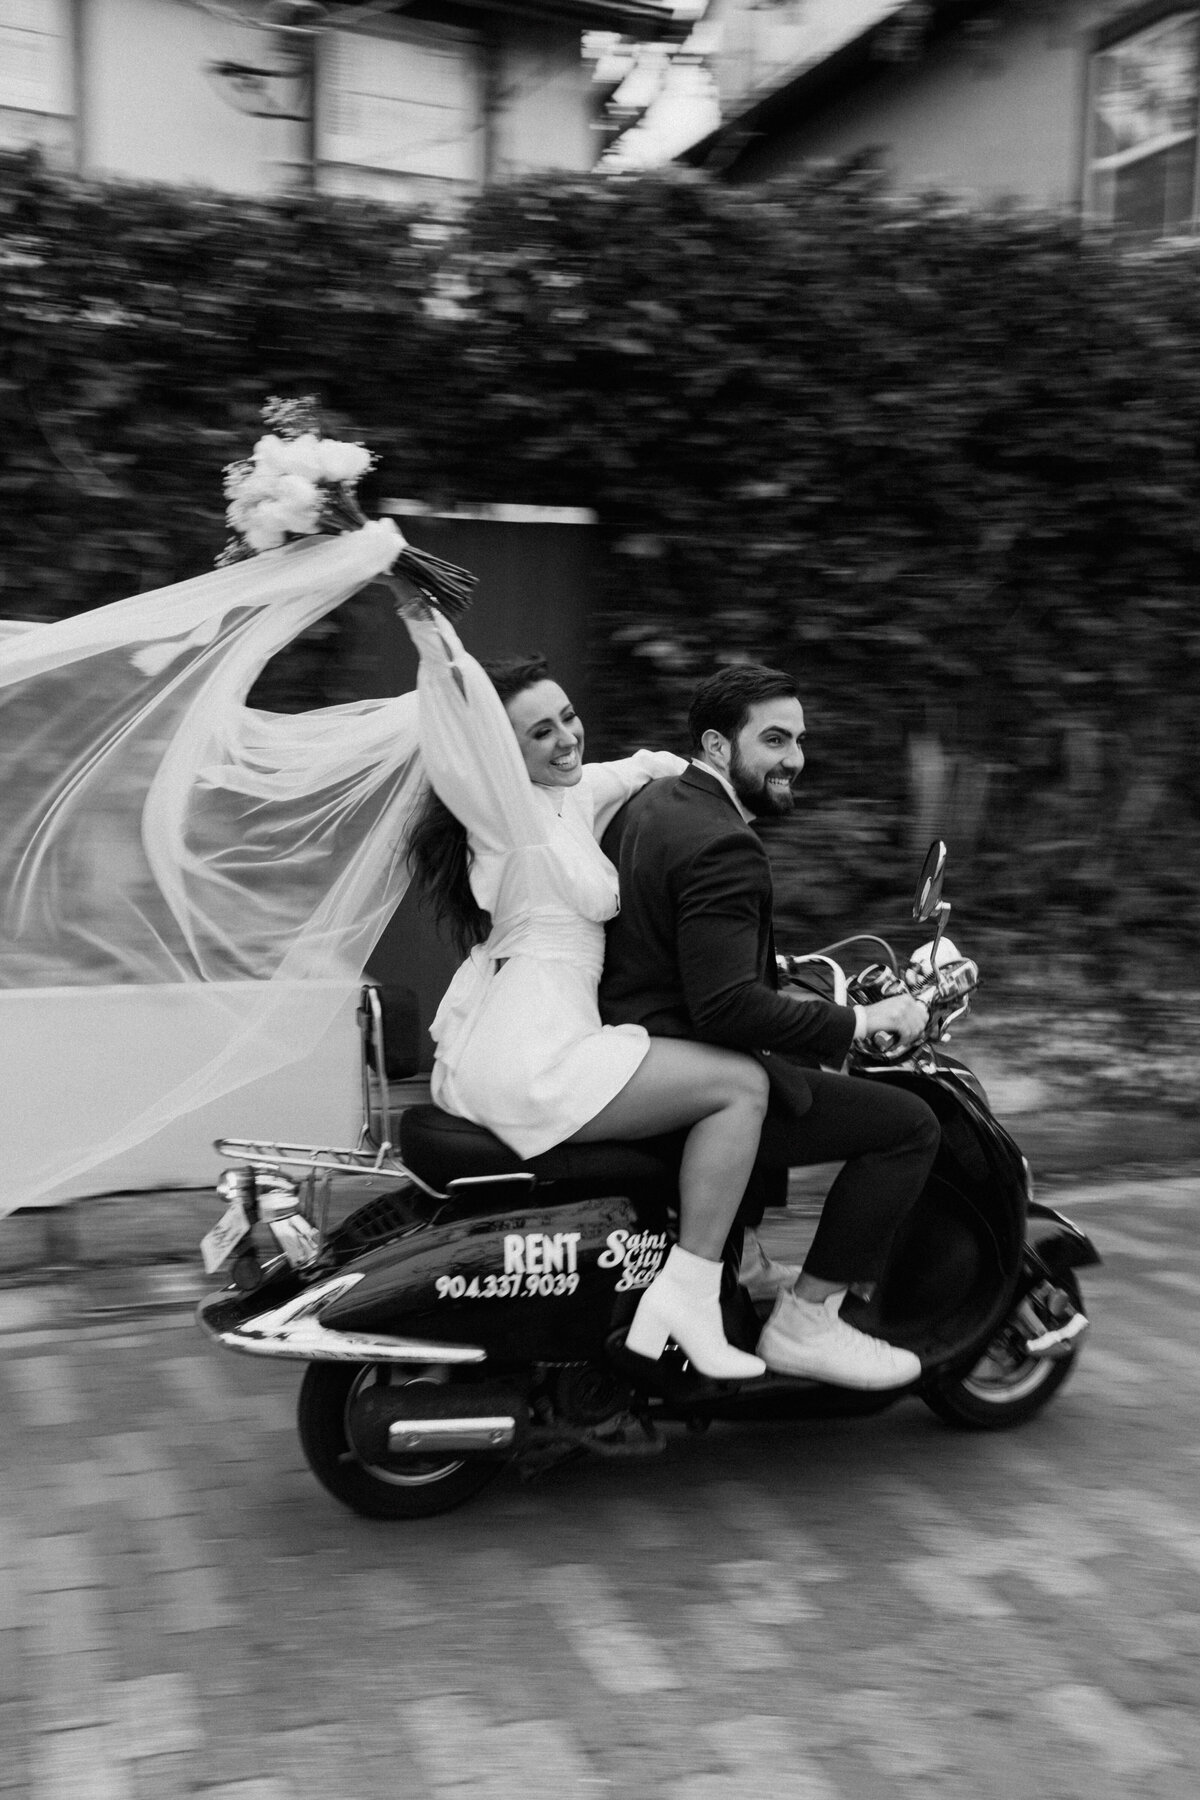 saint-augustine-florida-moped-vespa-elopement-italian-37